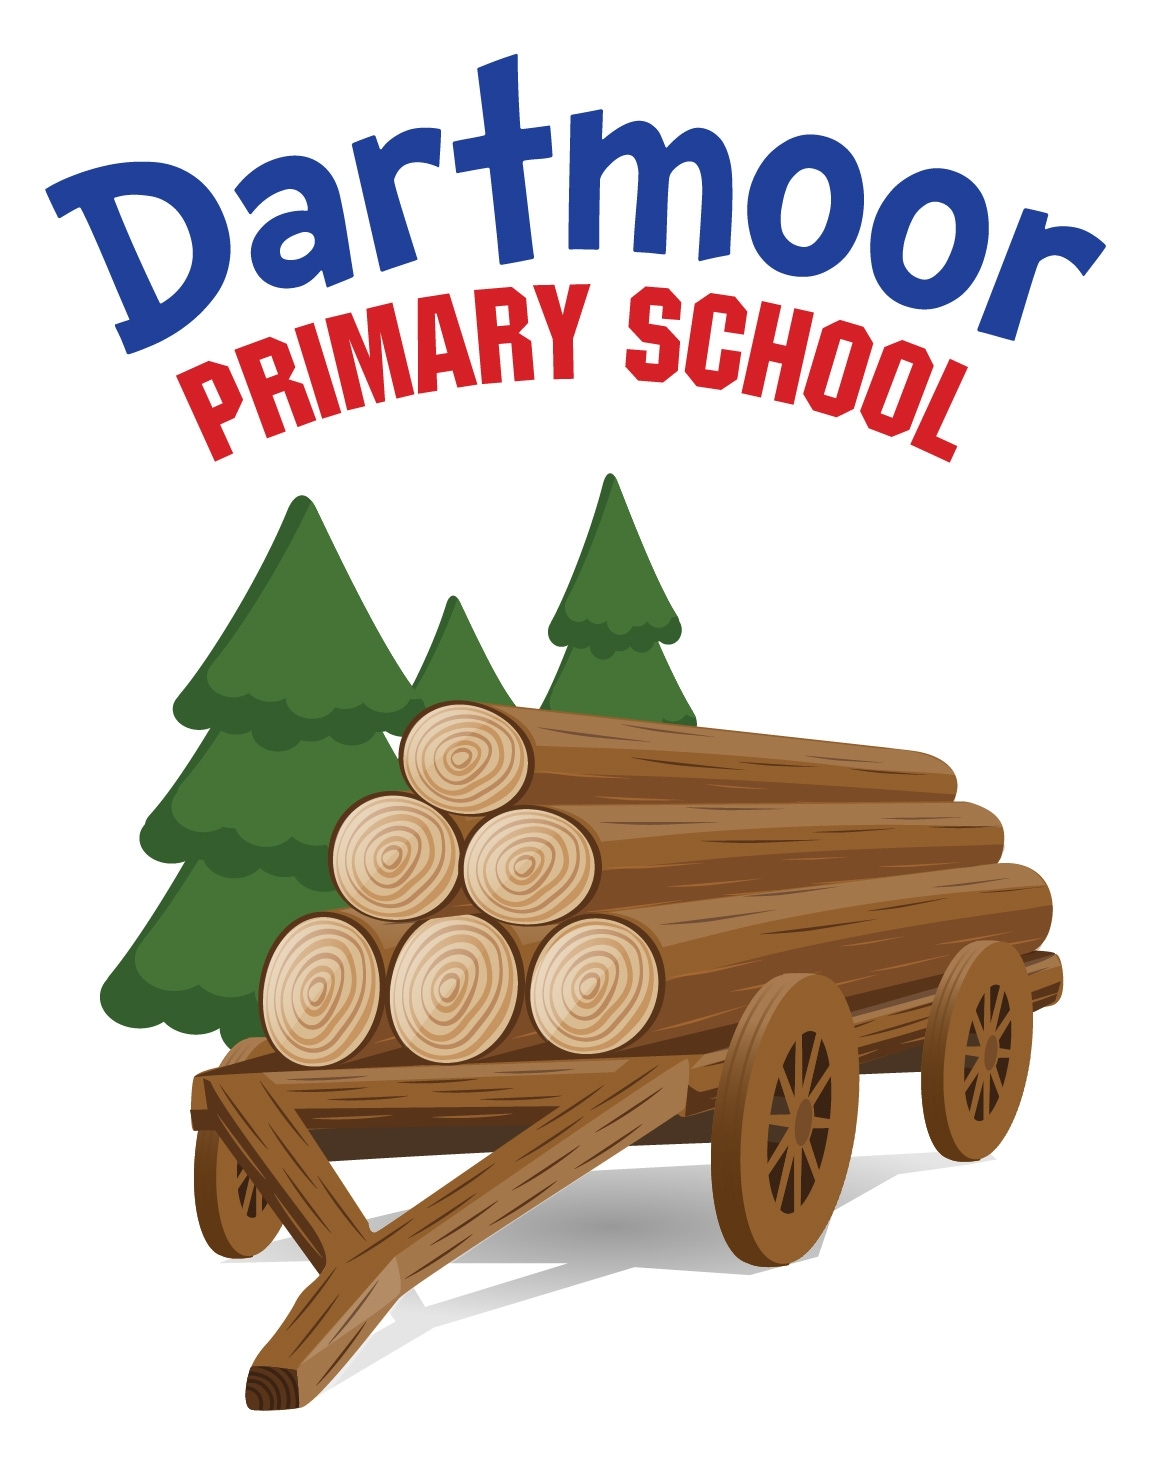 Dartmoor PS Fundraiser